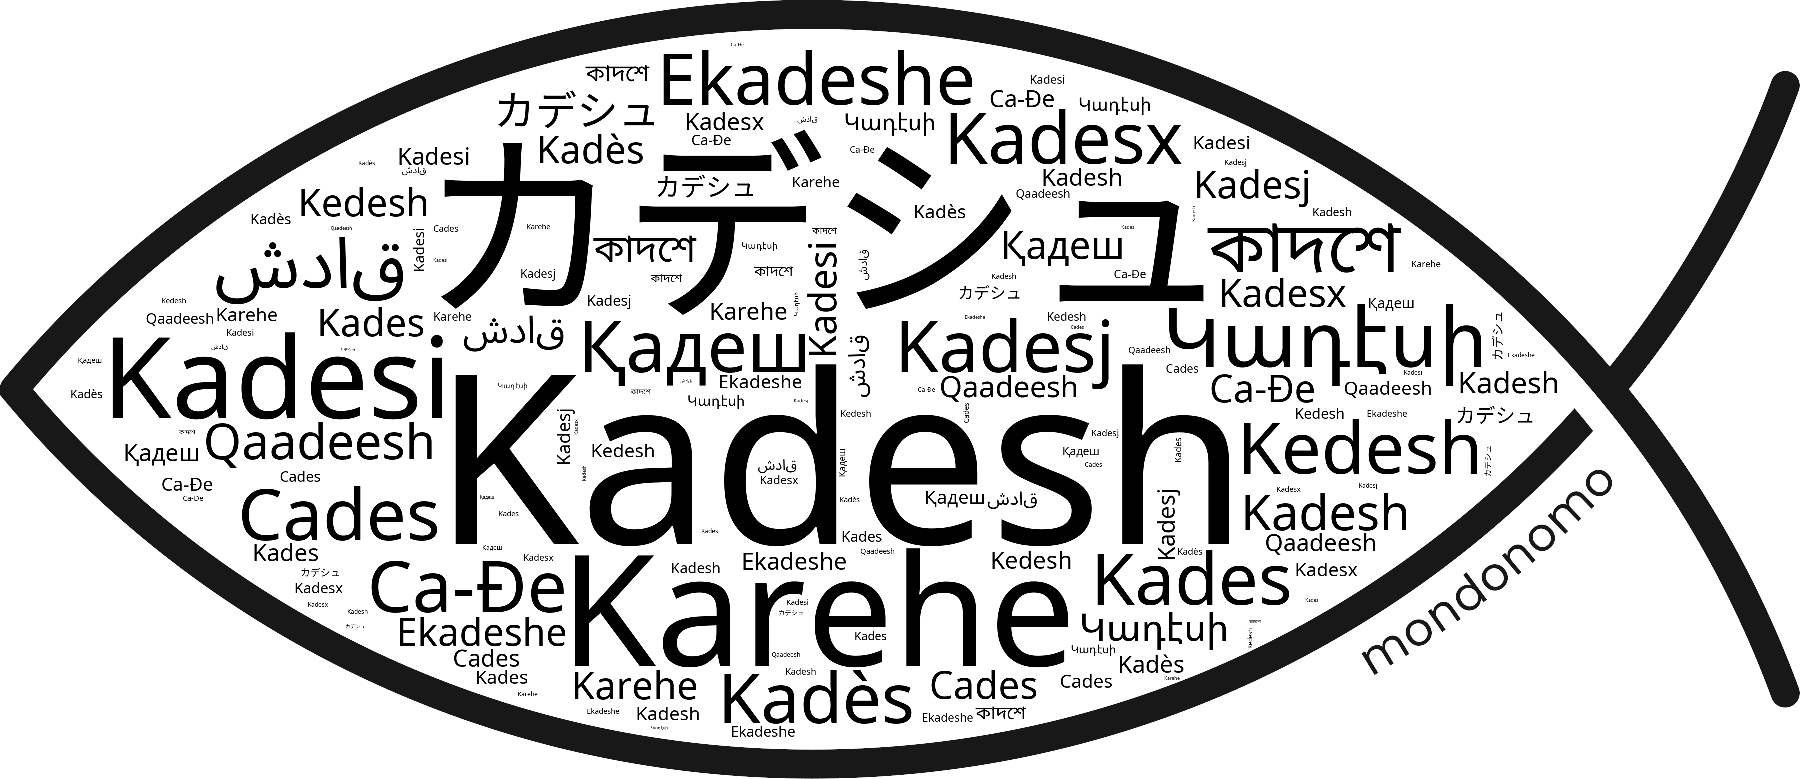 Name Kadesh in the world's Bibles